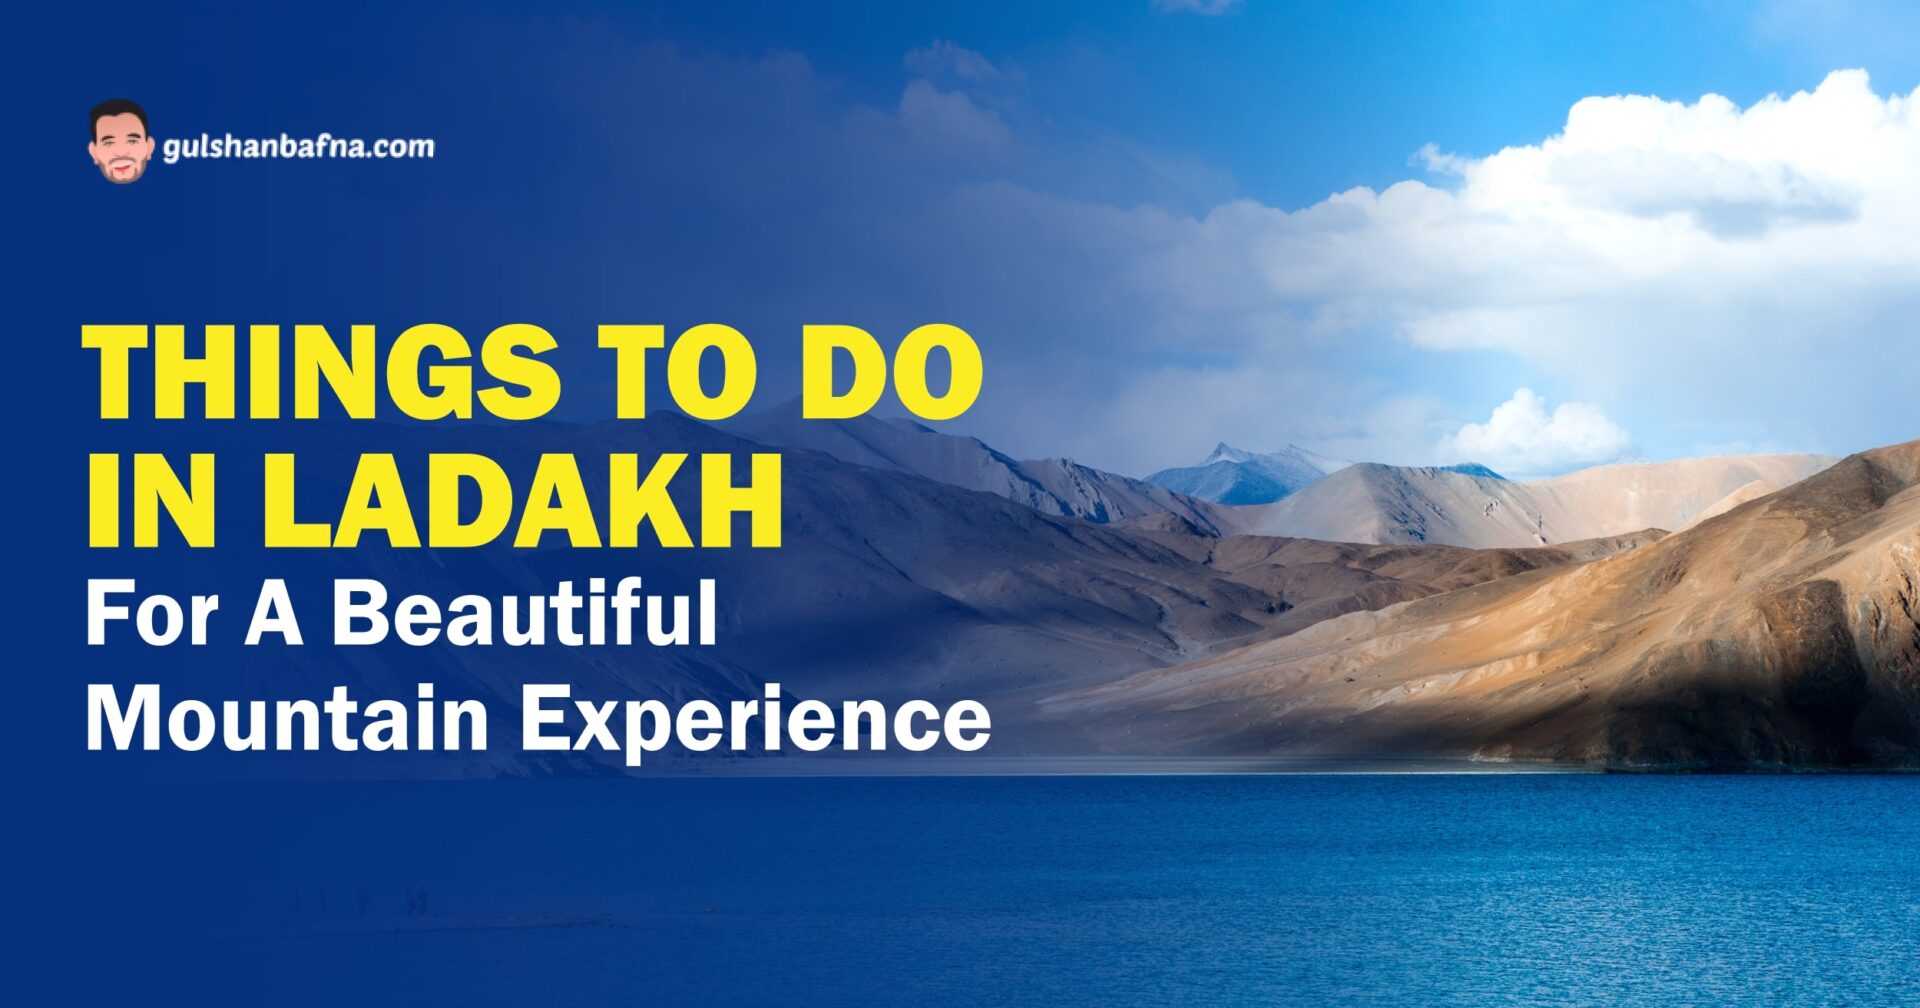 Things To Do In Leh Ladakh - Gulshan Bafna